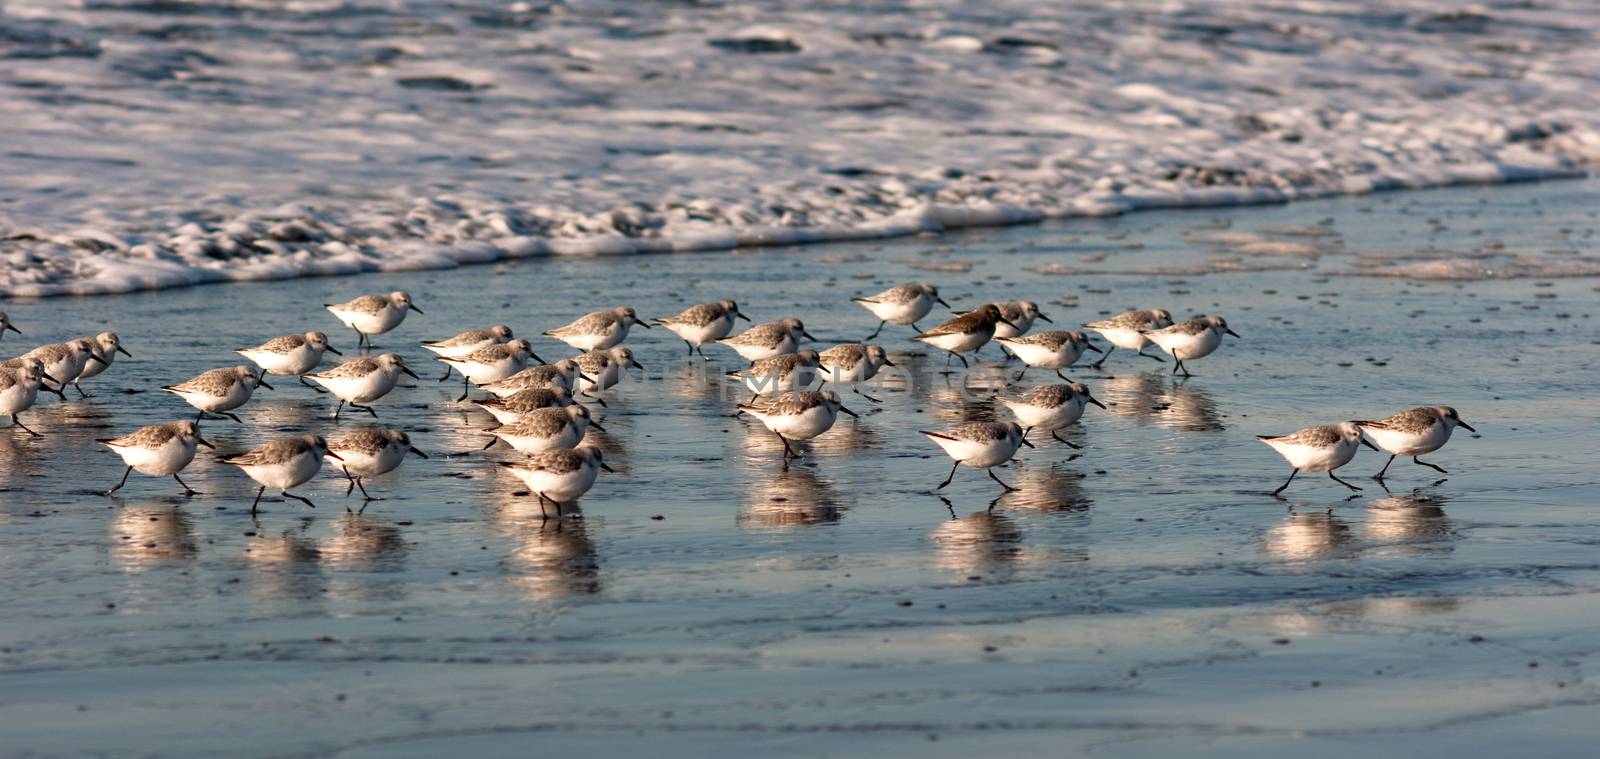 Sandpiper Birds Run Up Beach Feeding Sand Ocean Surf by ChrisBoswell